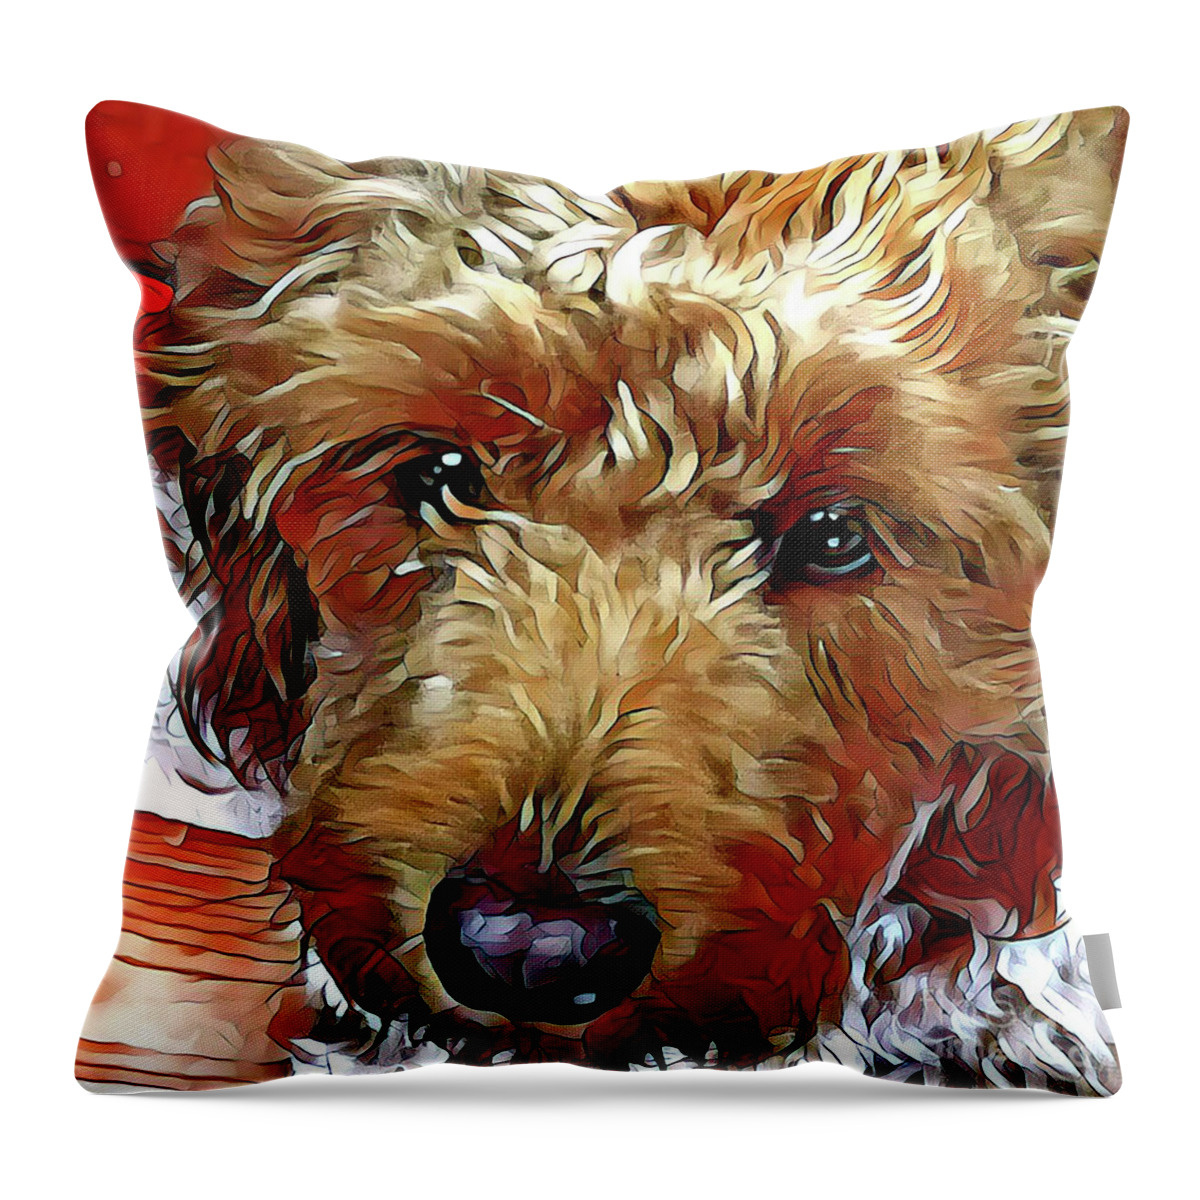 Puppy Throw Pillow featuring the digital art Peek-a-Boo Puppy by Xine Segalas